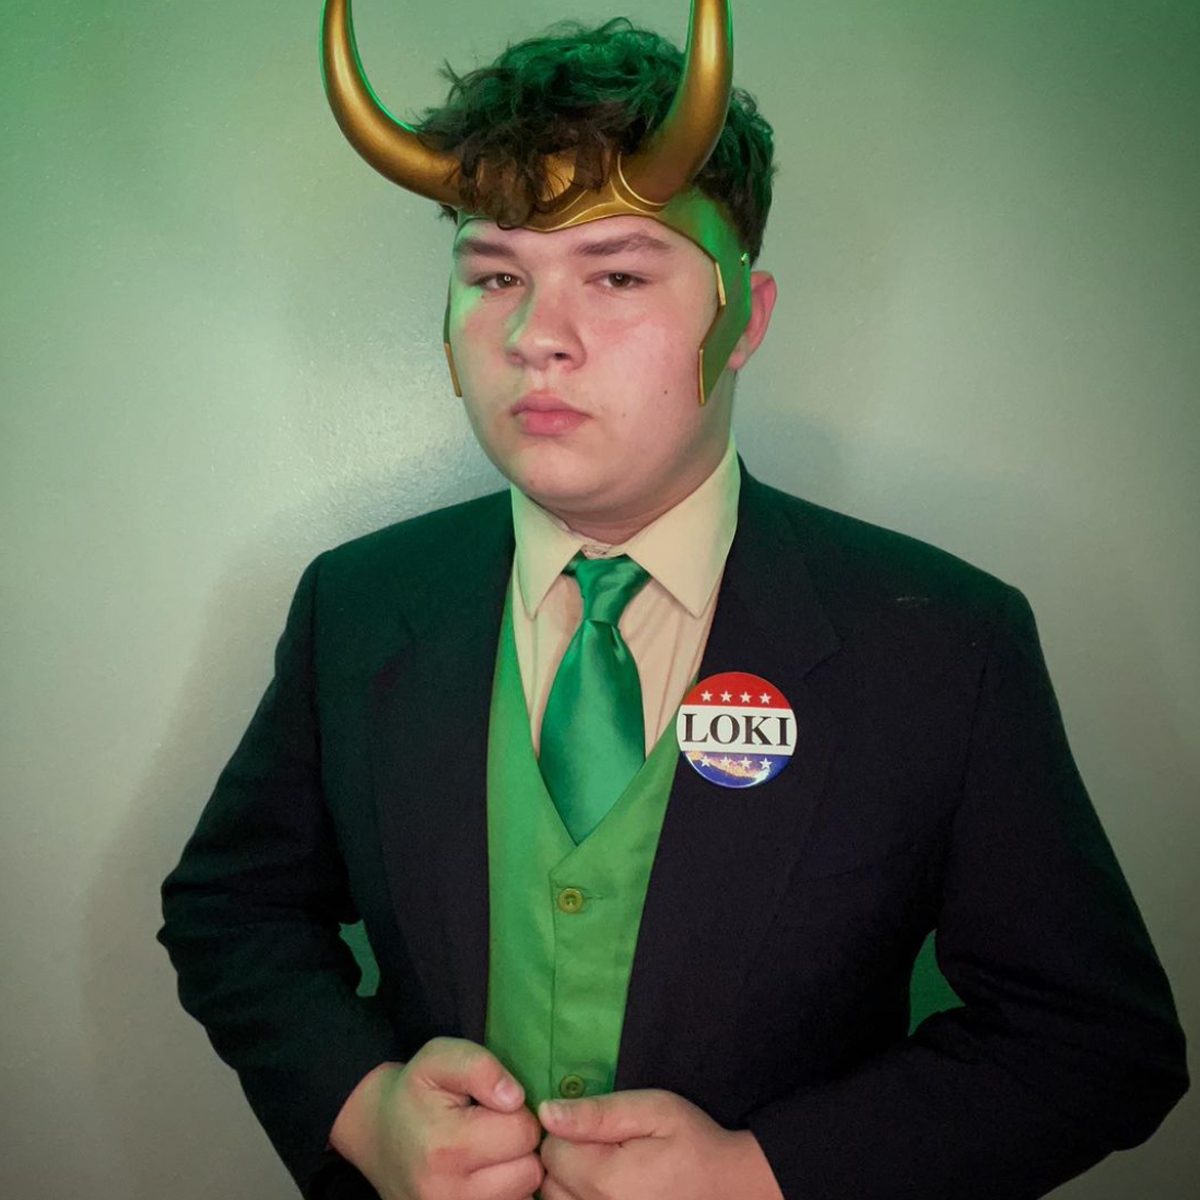 Loki For President Halloween Costume Courtesy @ethandoescos Via Instagram